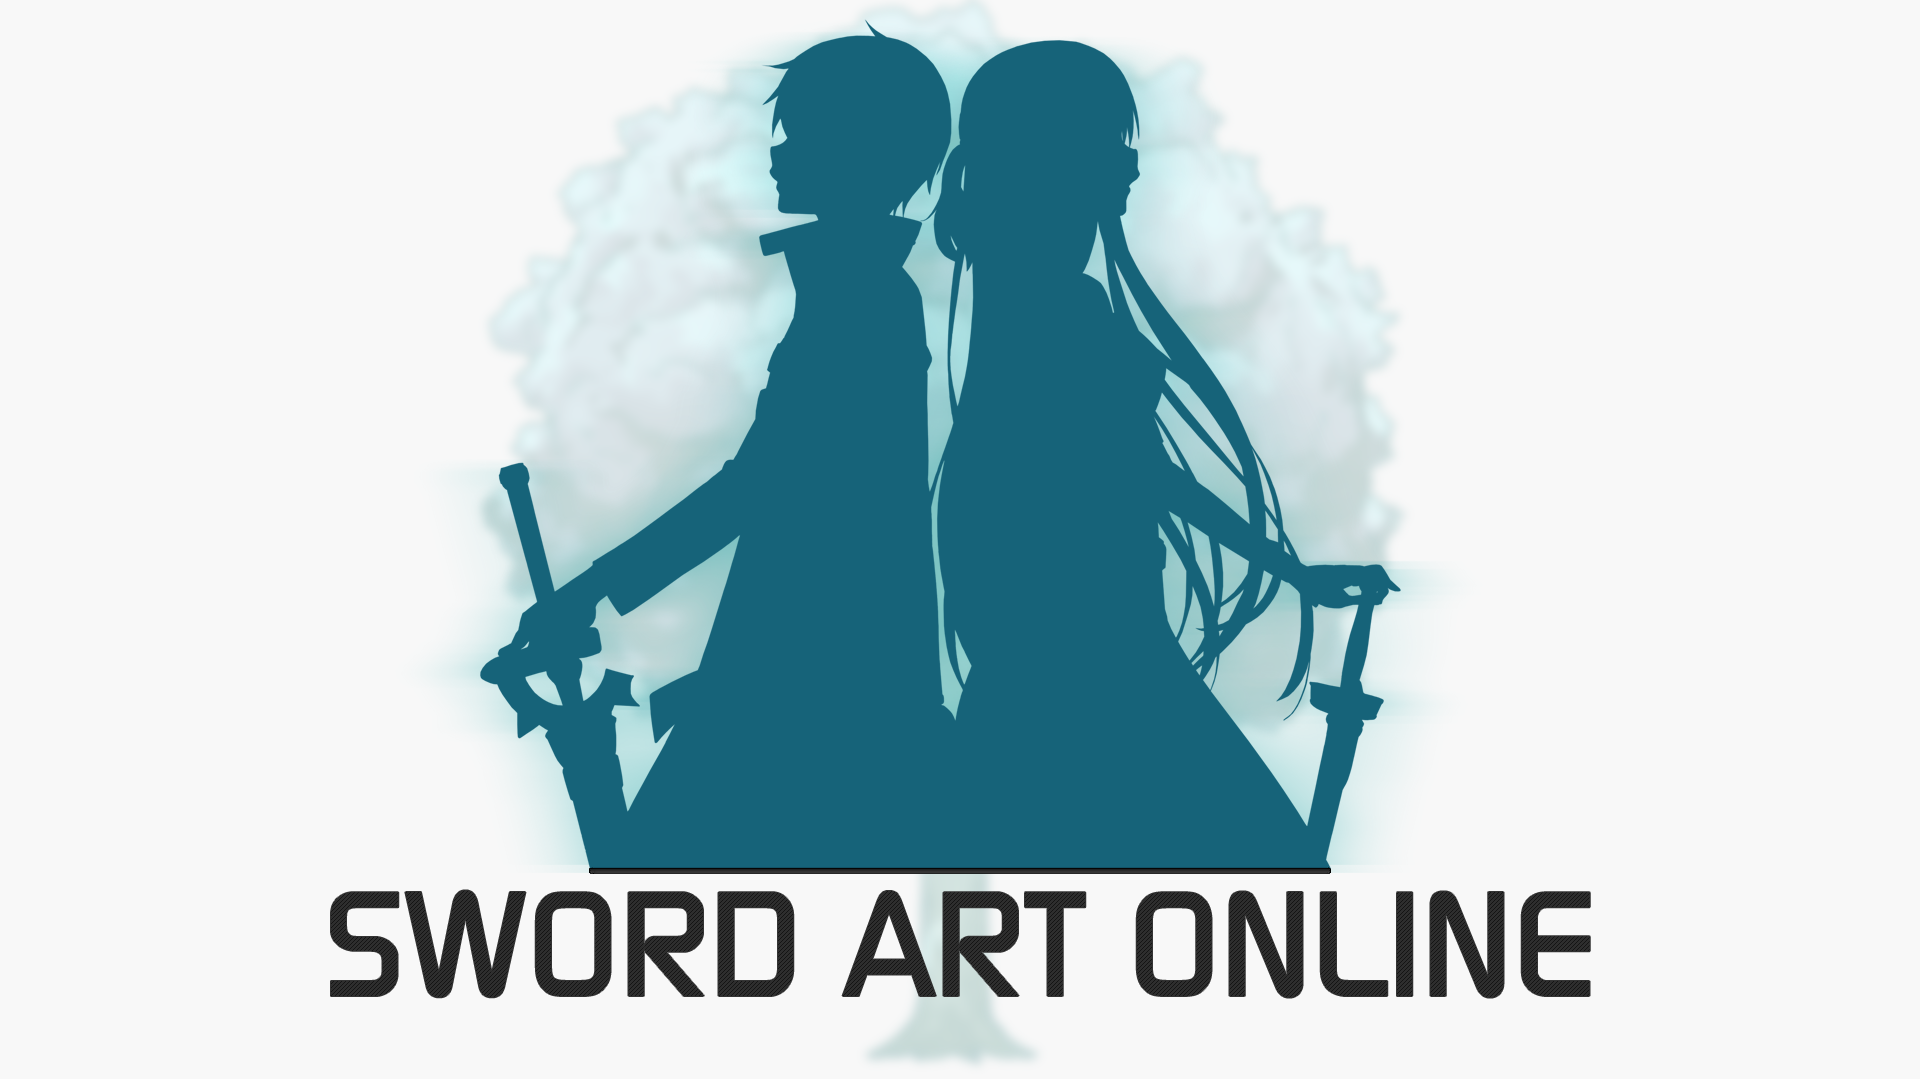 Sword Art Online Wallpaper Kirito and Asuna by Zyvox